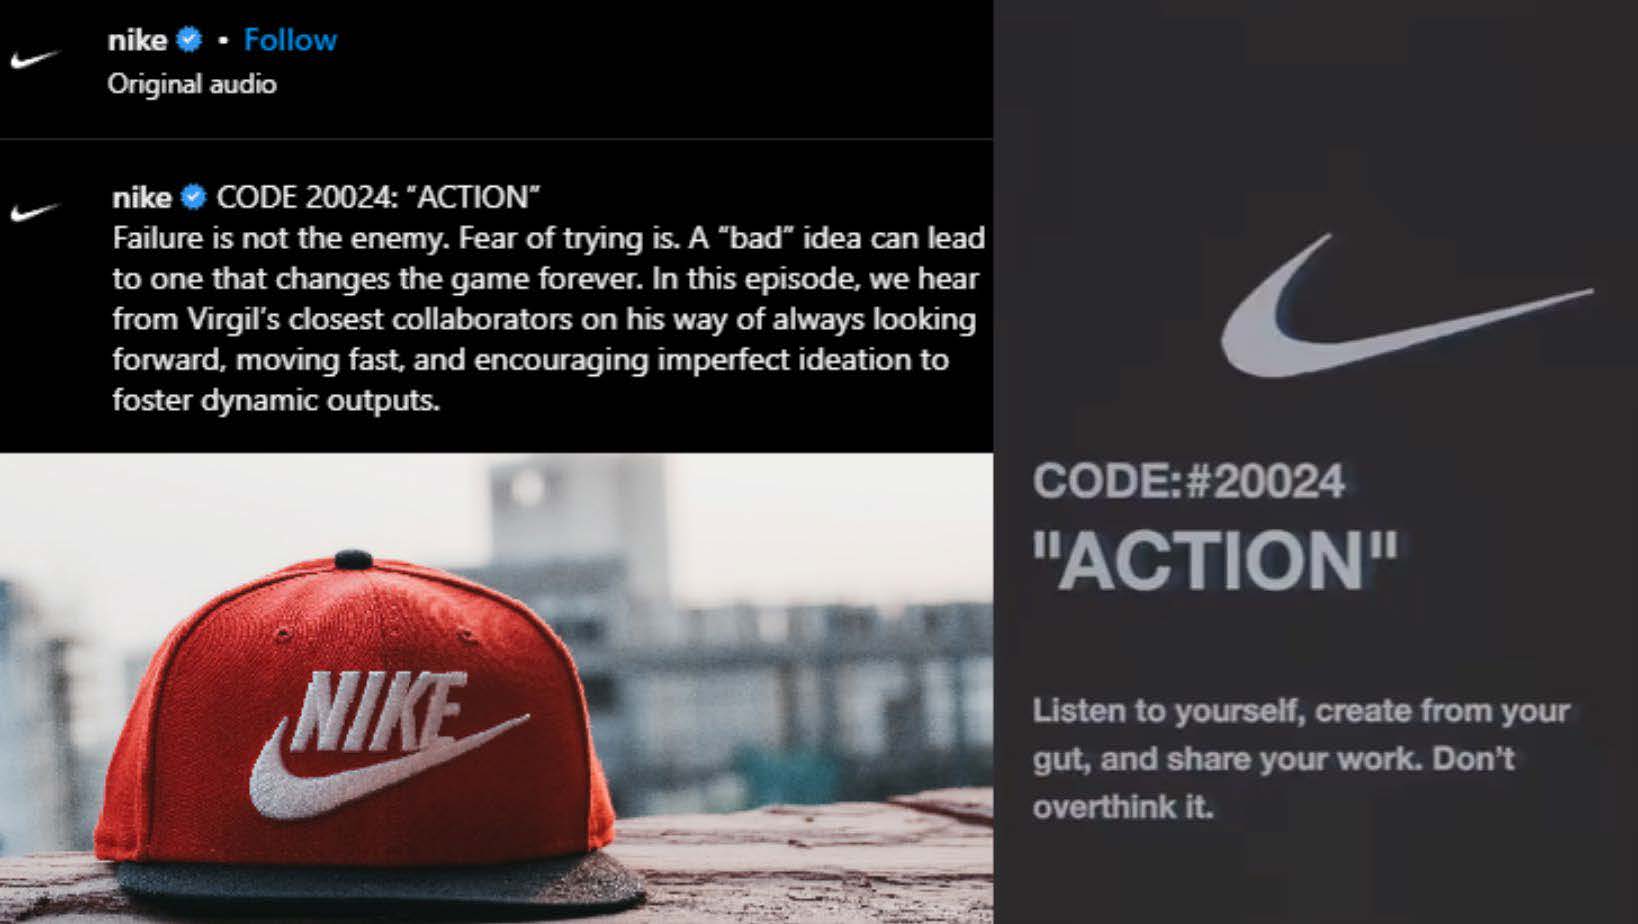 Nike’s Brand Voice